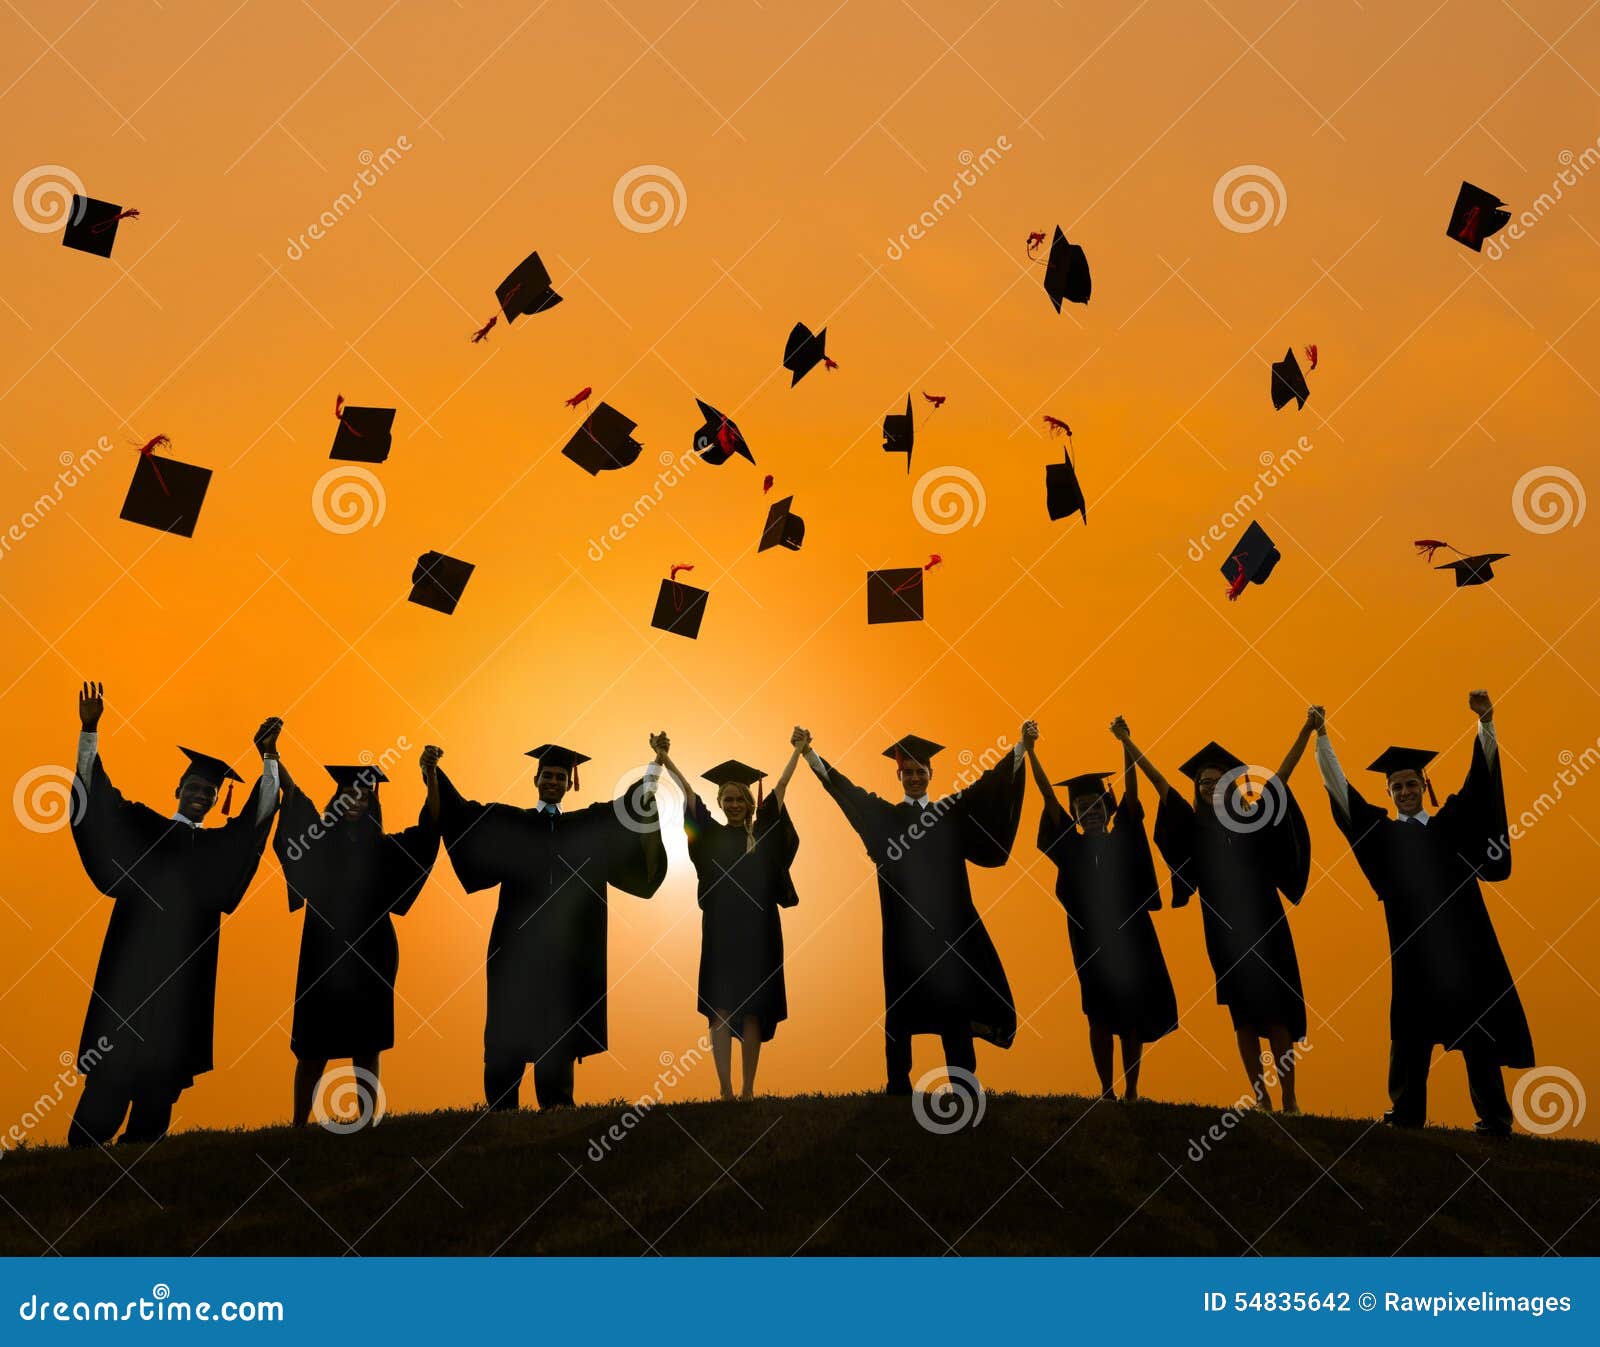 celebration education graduation student success learning concept